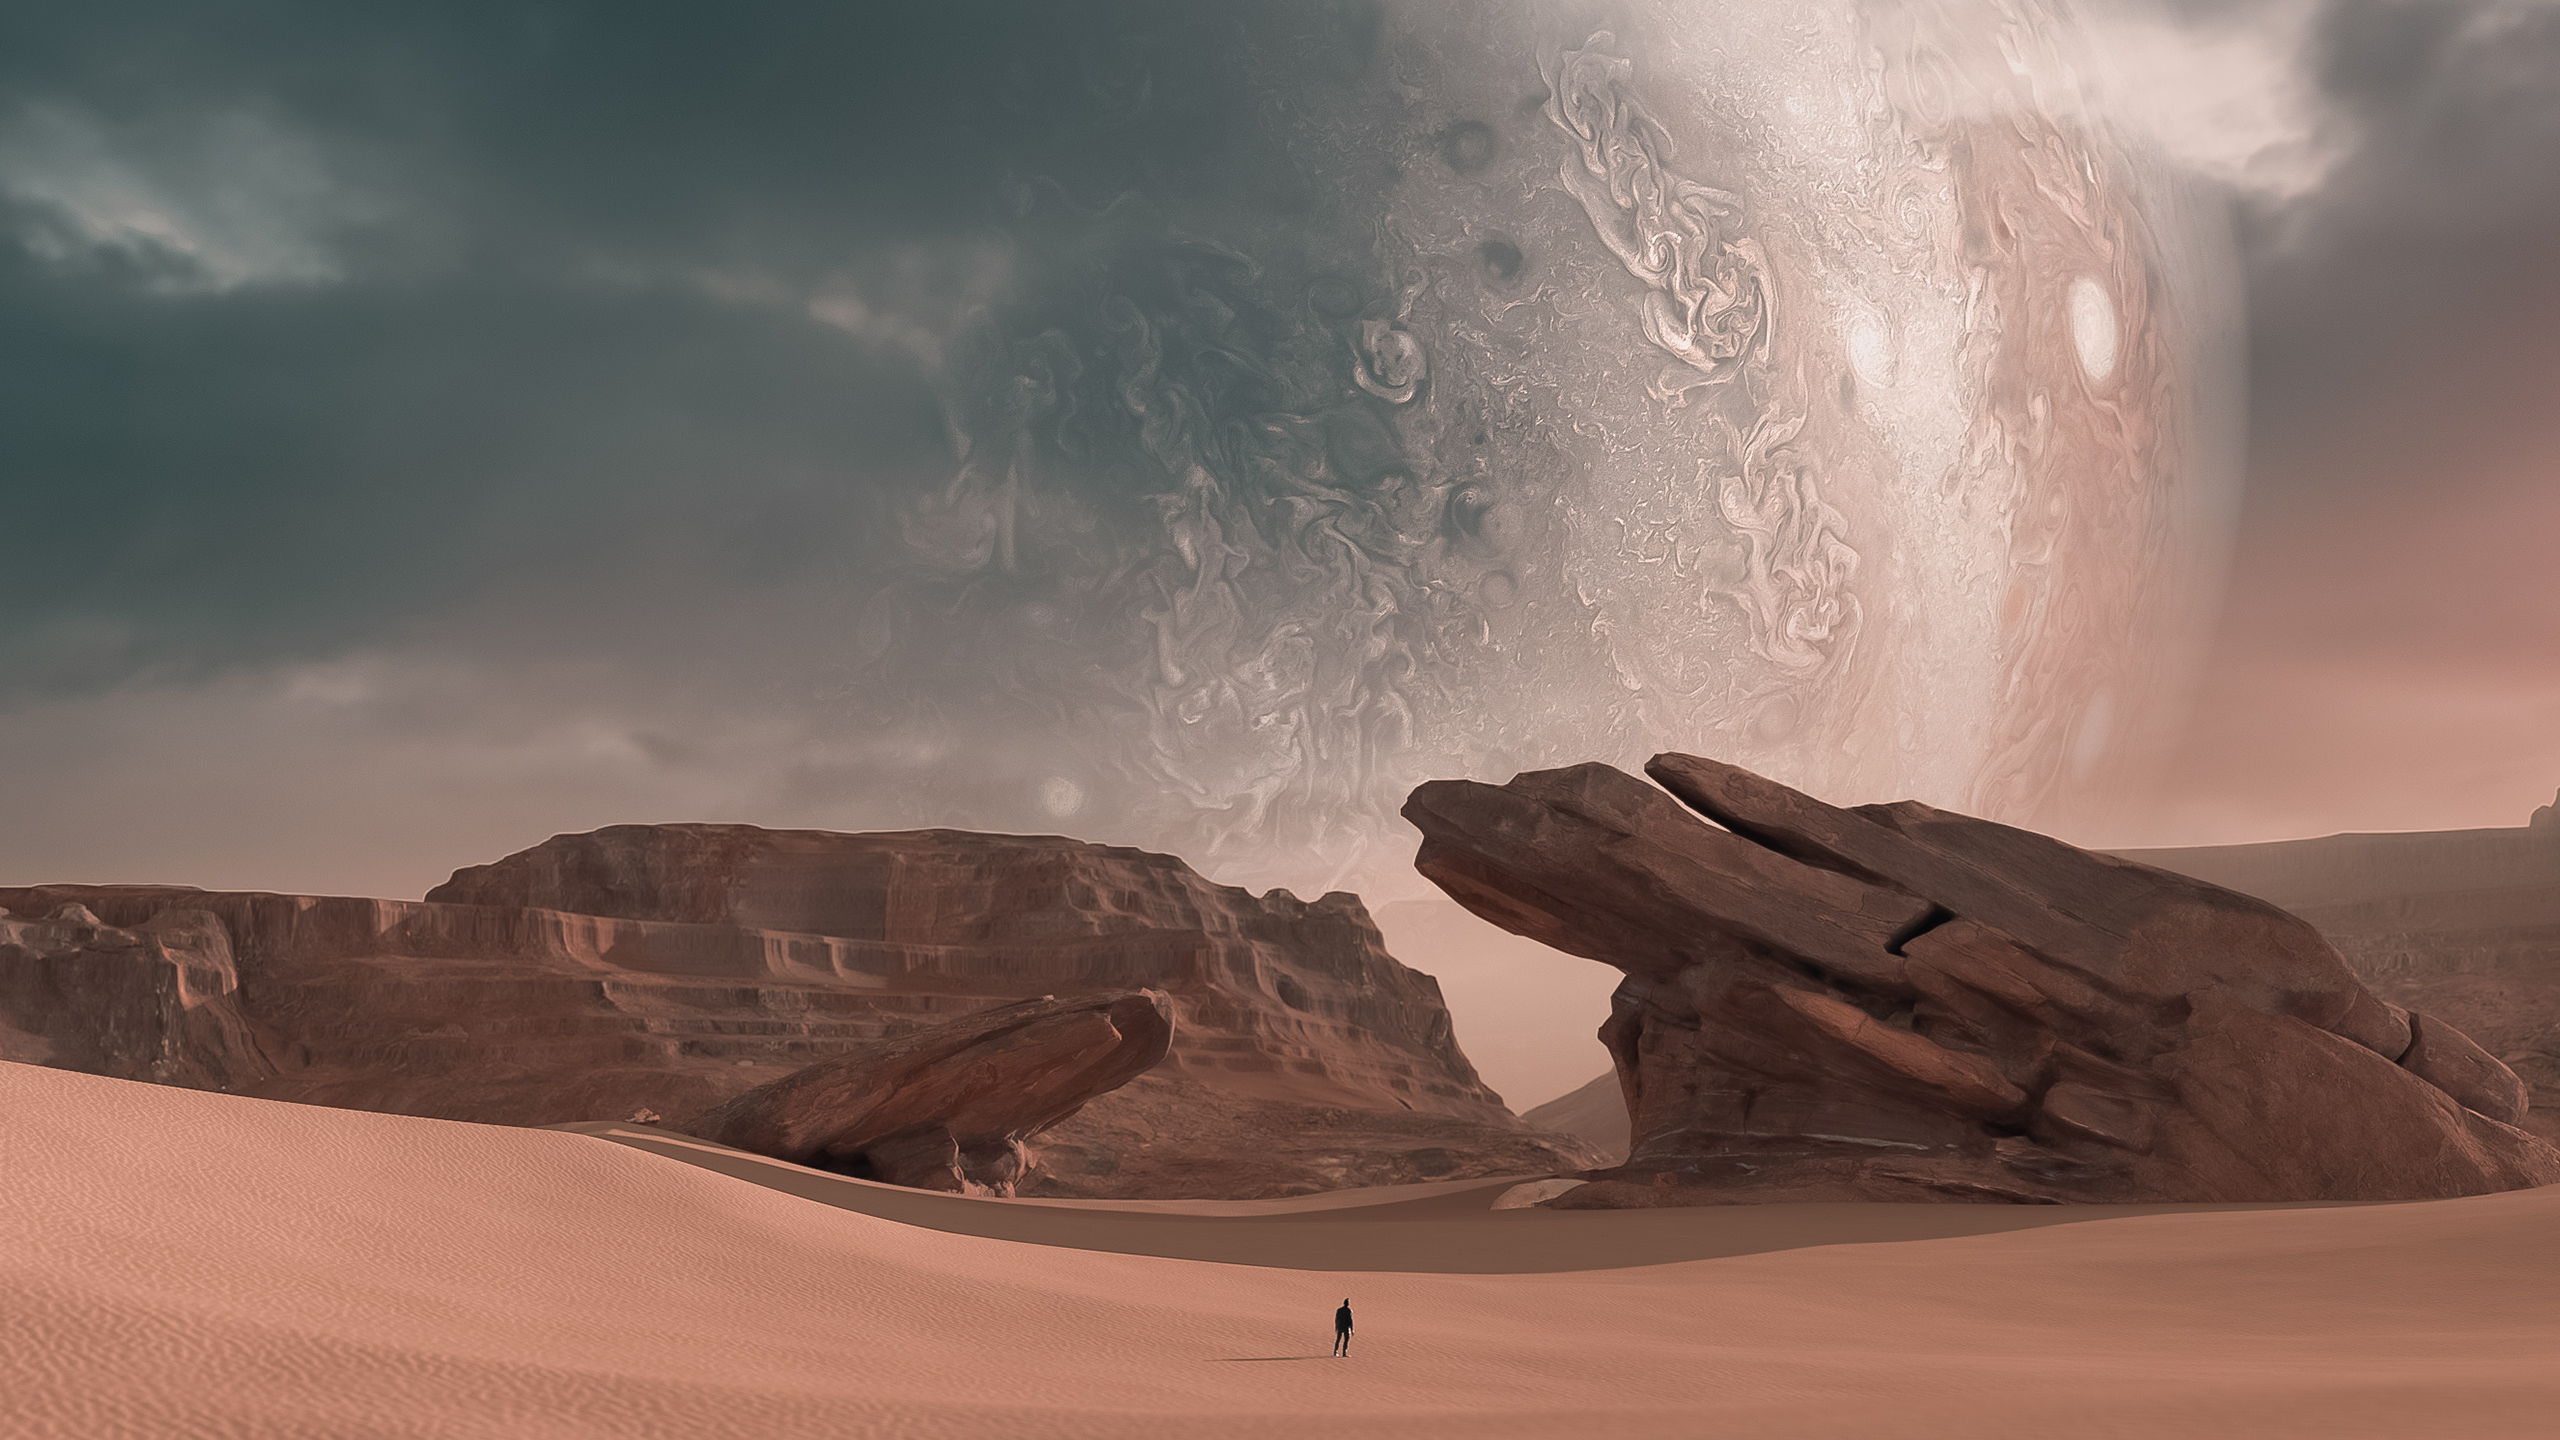 General 2560x1440 Jupiter sky digital art artwork rocks sand desert dunes rock formation